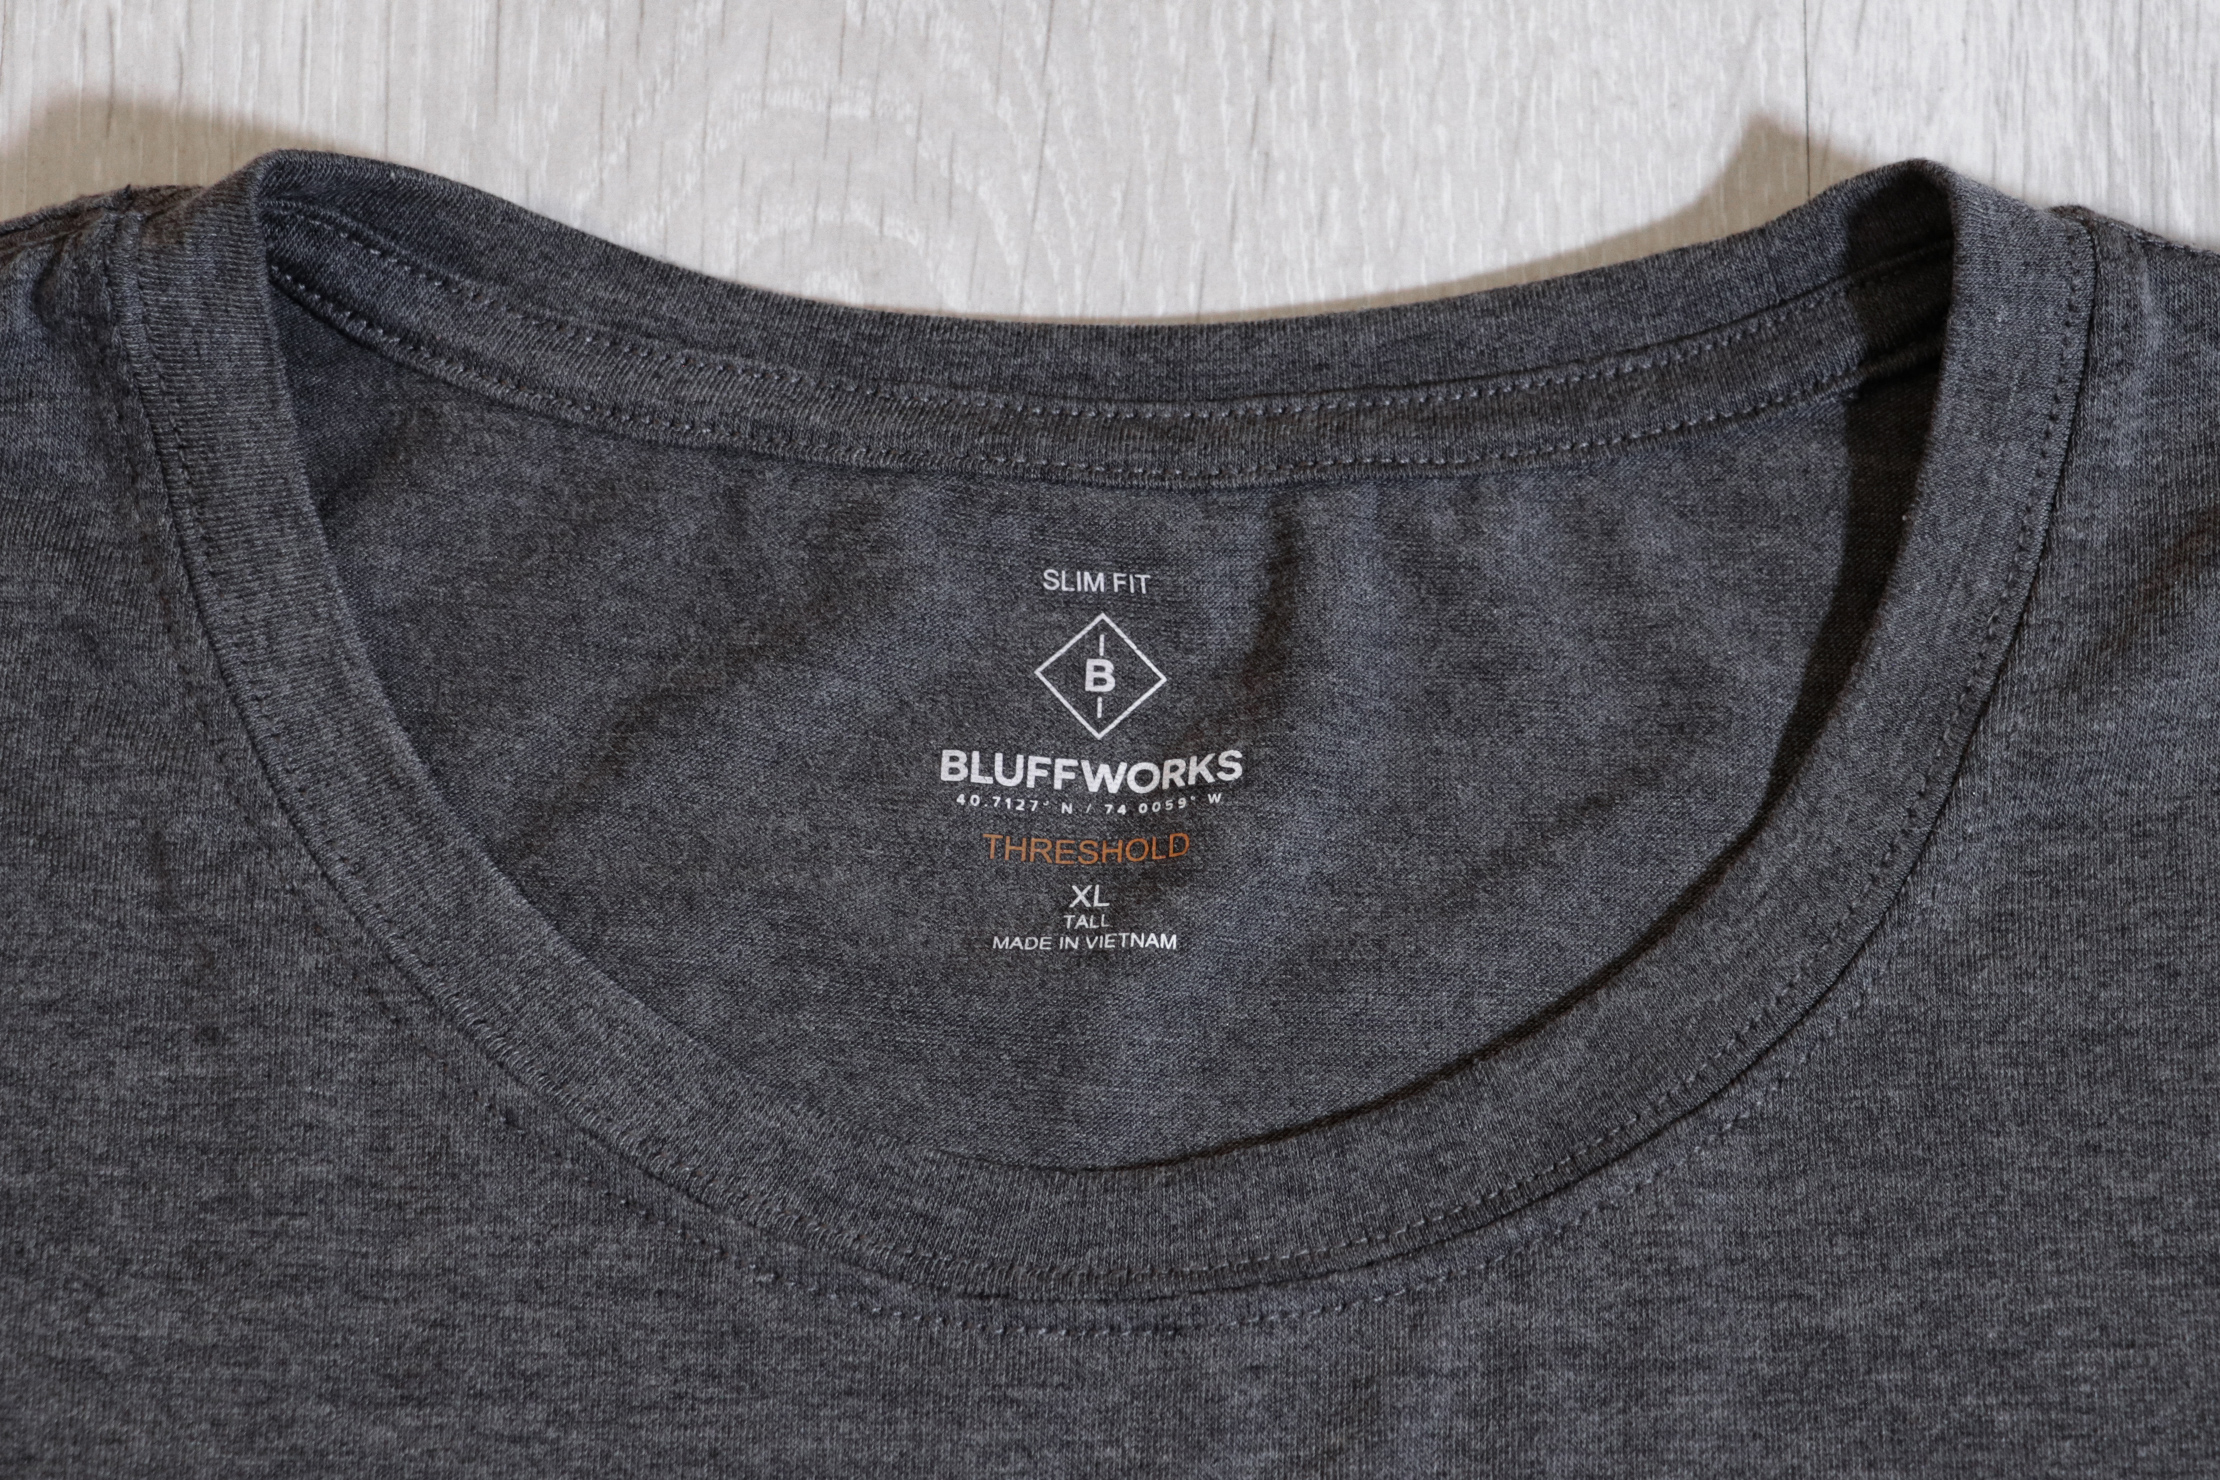 Bluffworks Threshold Performance T-shirt Label